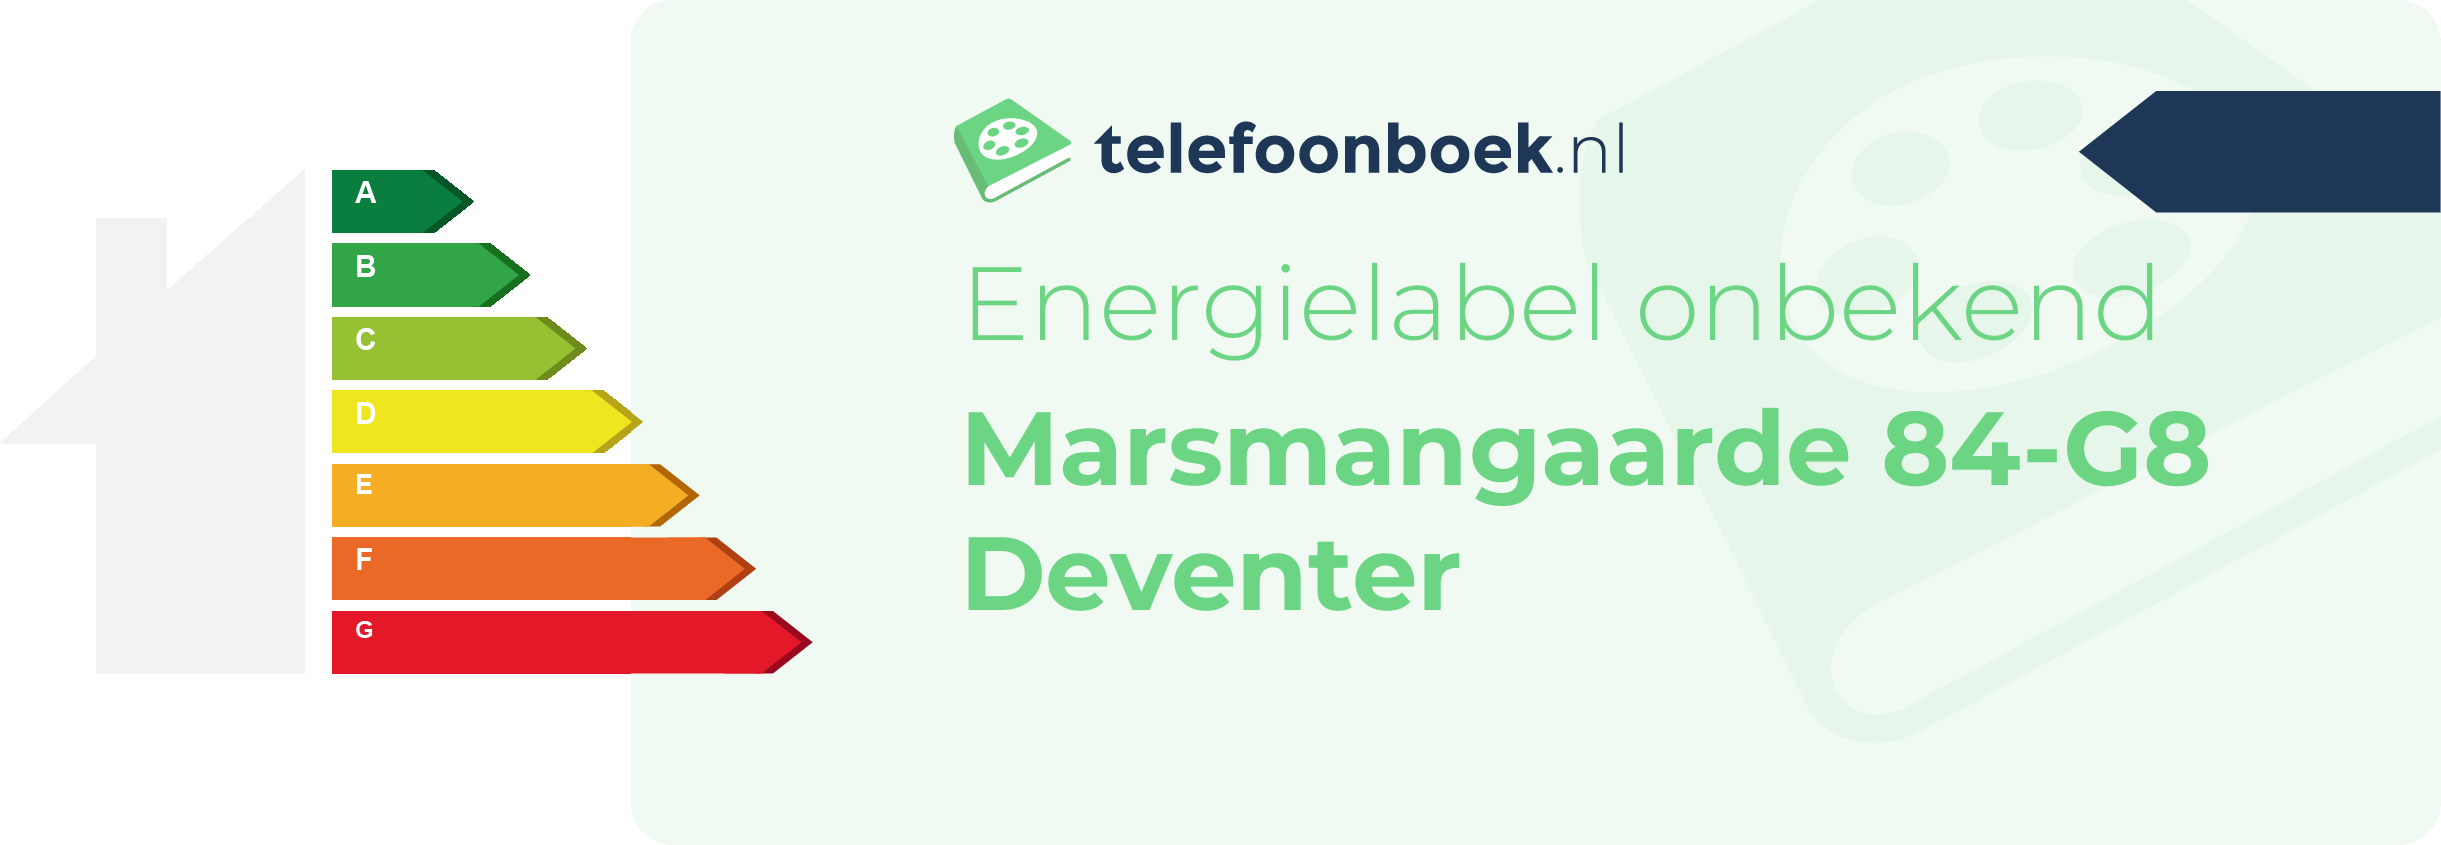 Energielabel Marsmangaarde 84-G8 Deventer